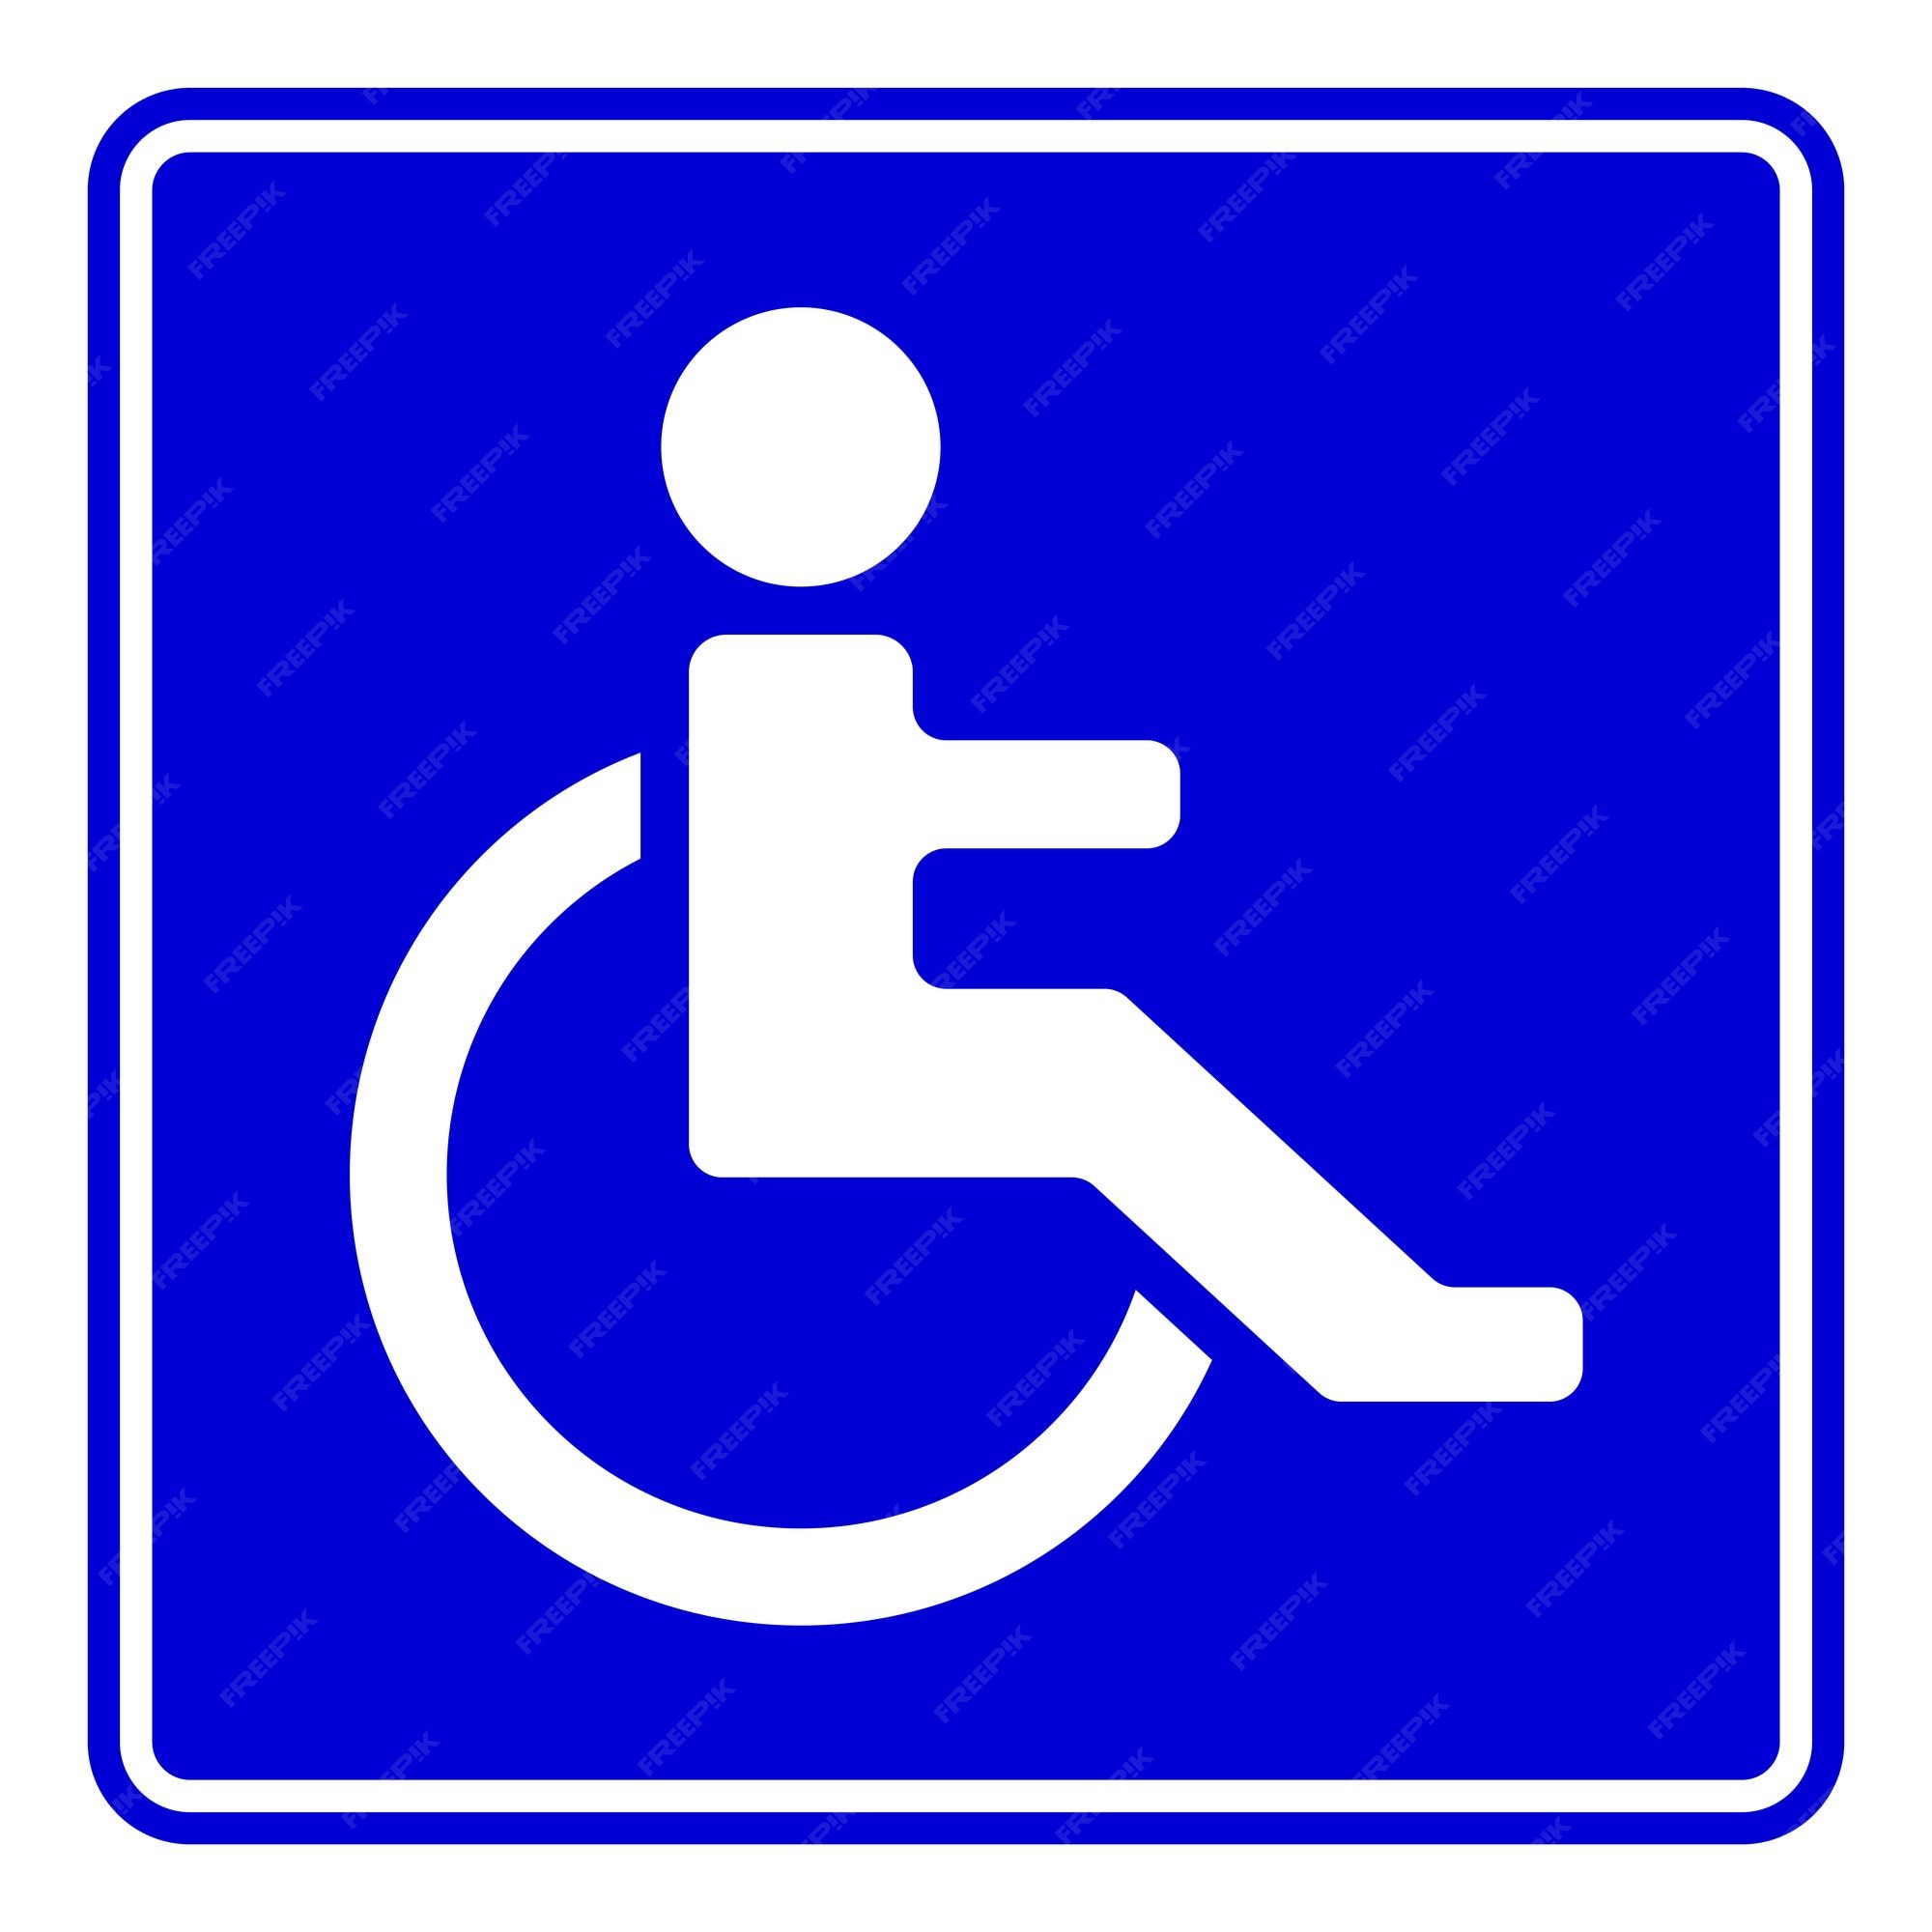 Handicap Sign Images - Free Download on Freepik